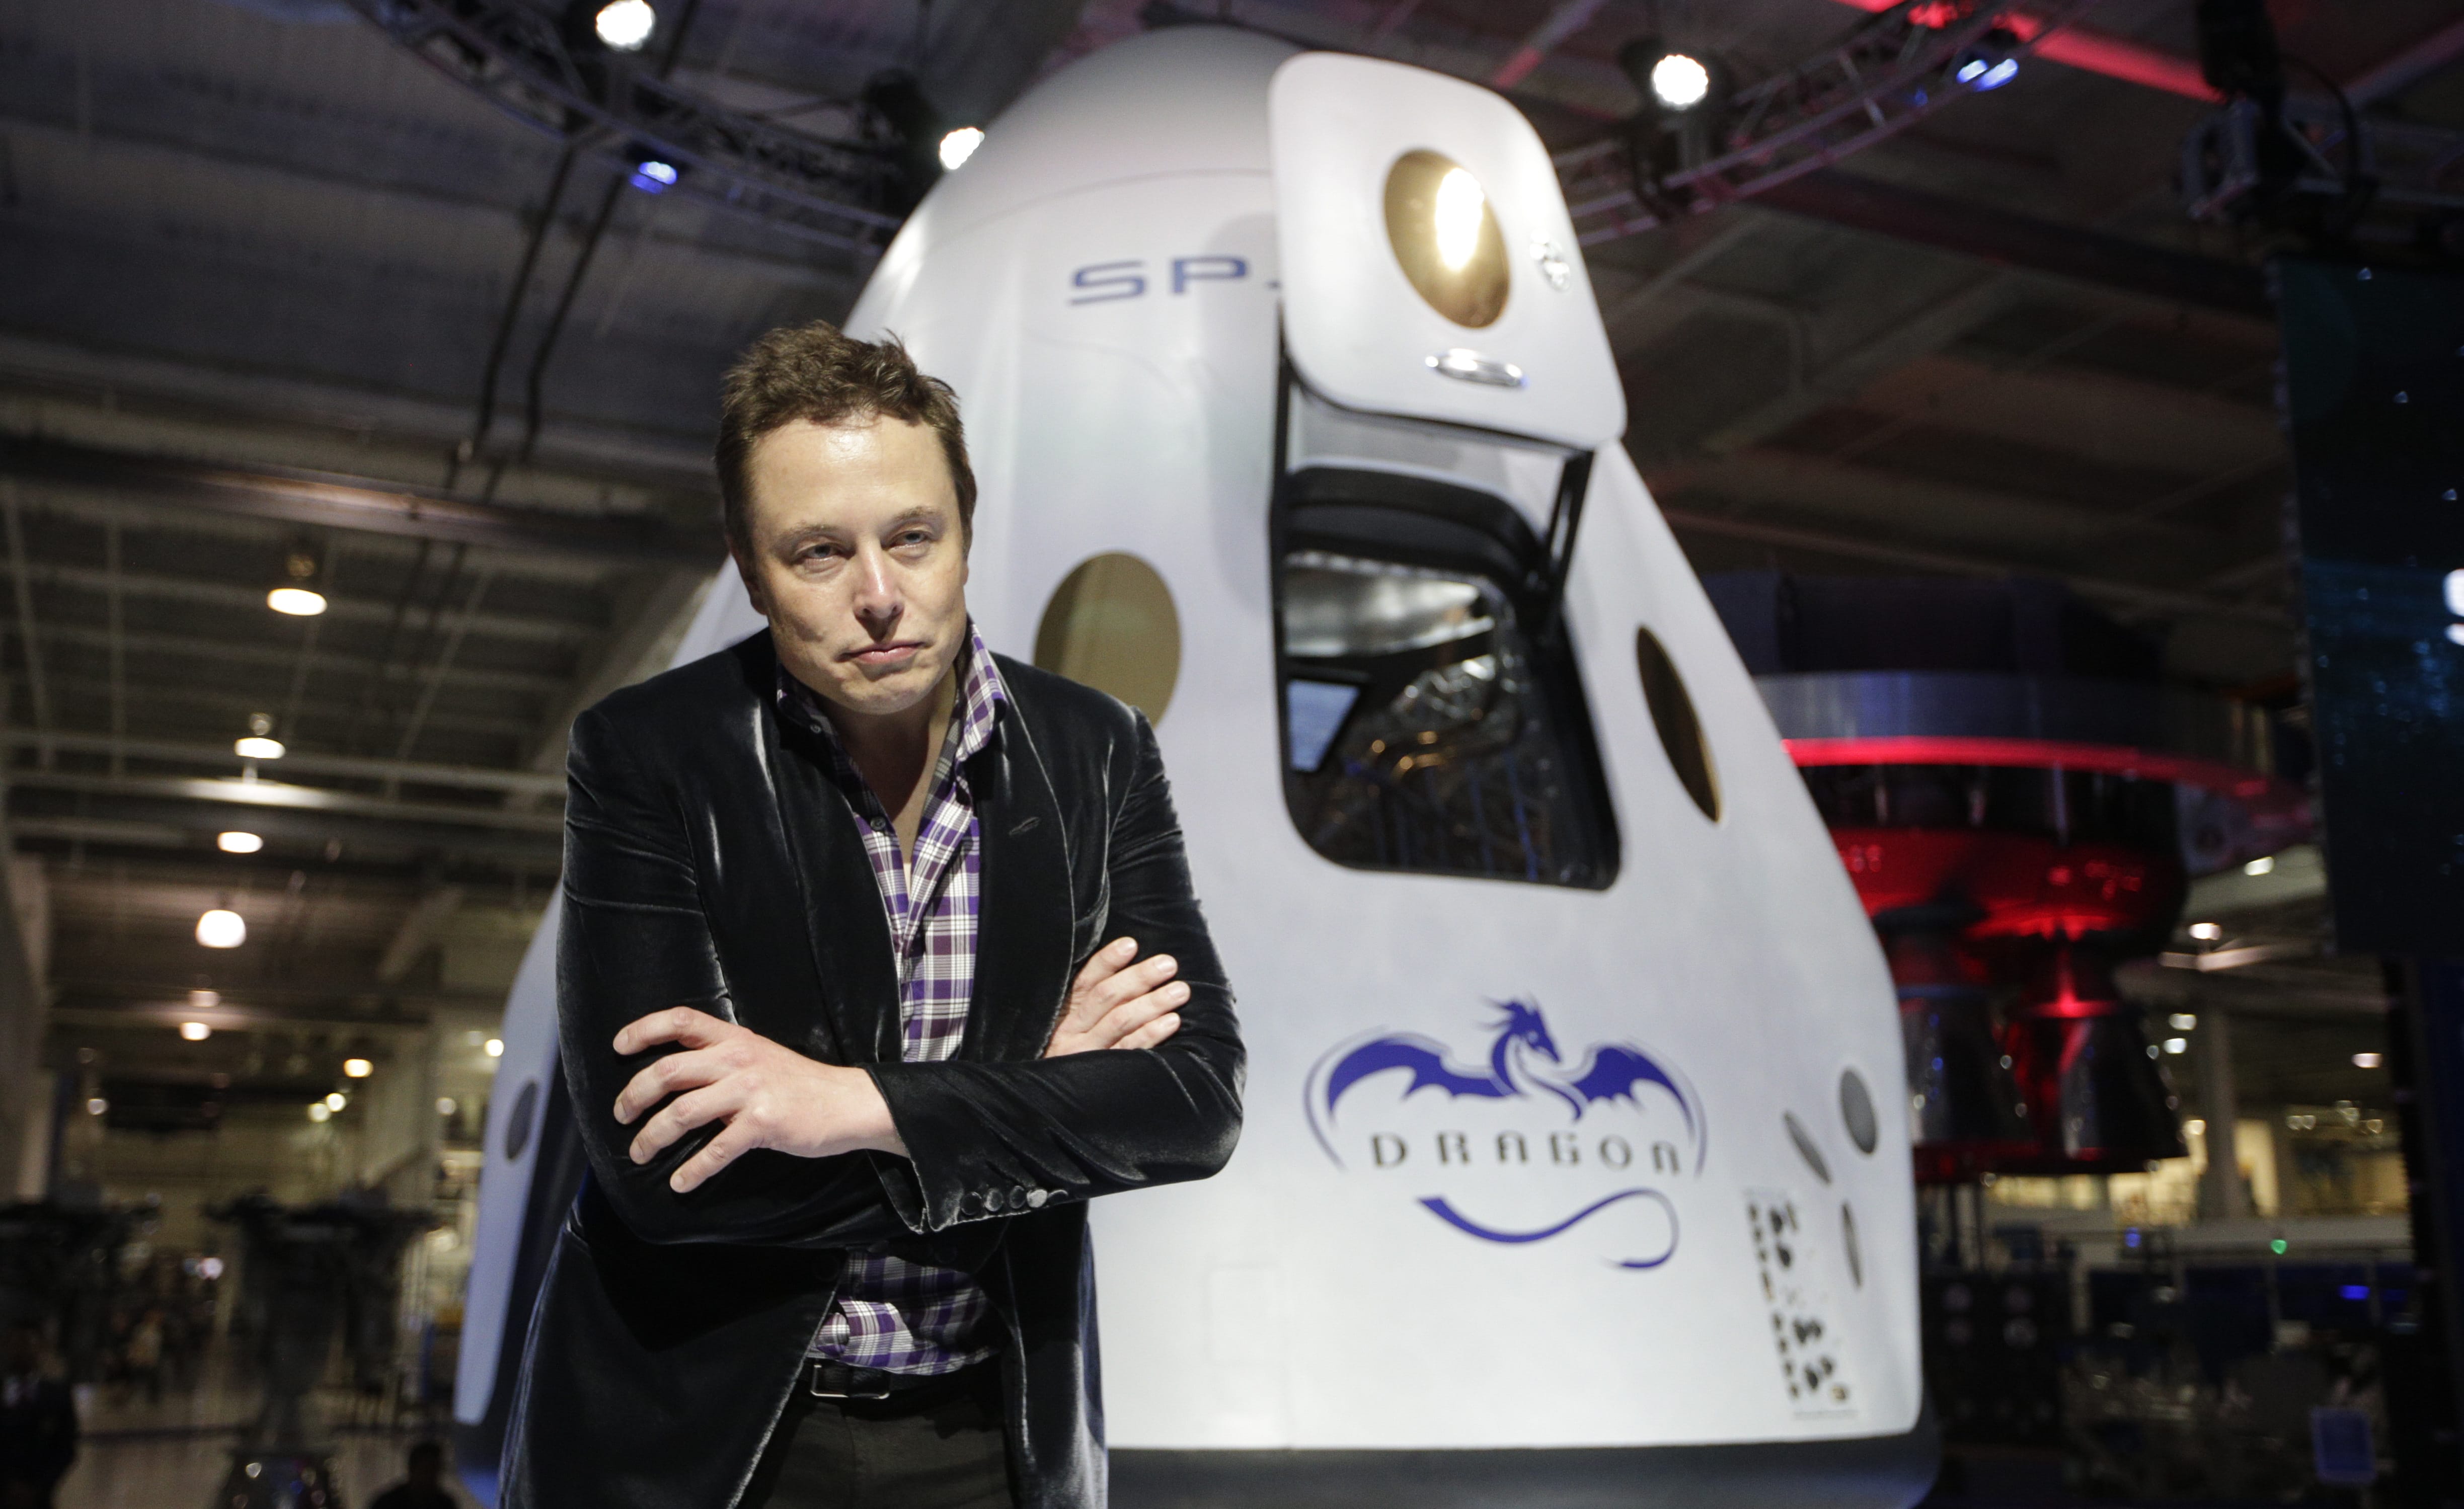 Marte, Humanidad, Elon Musk, Bradbury